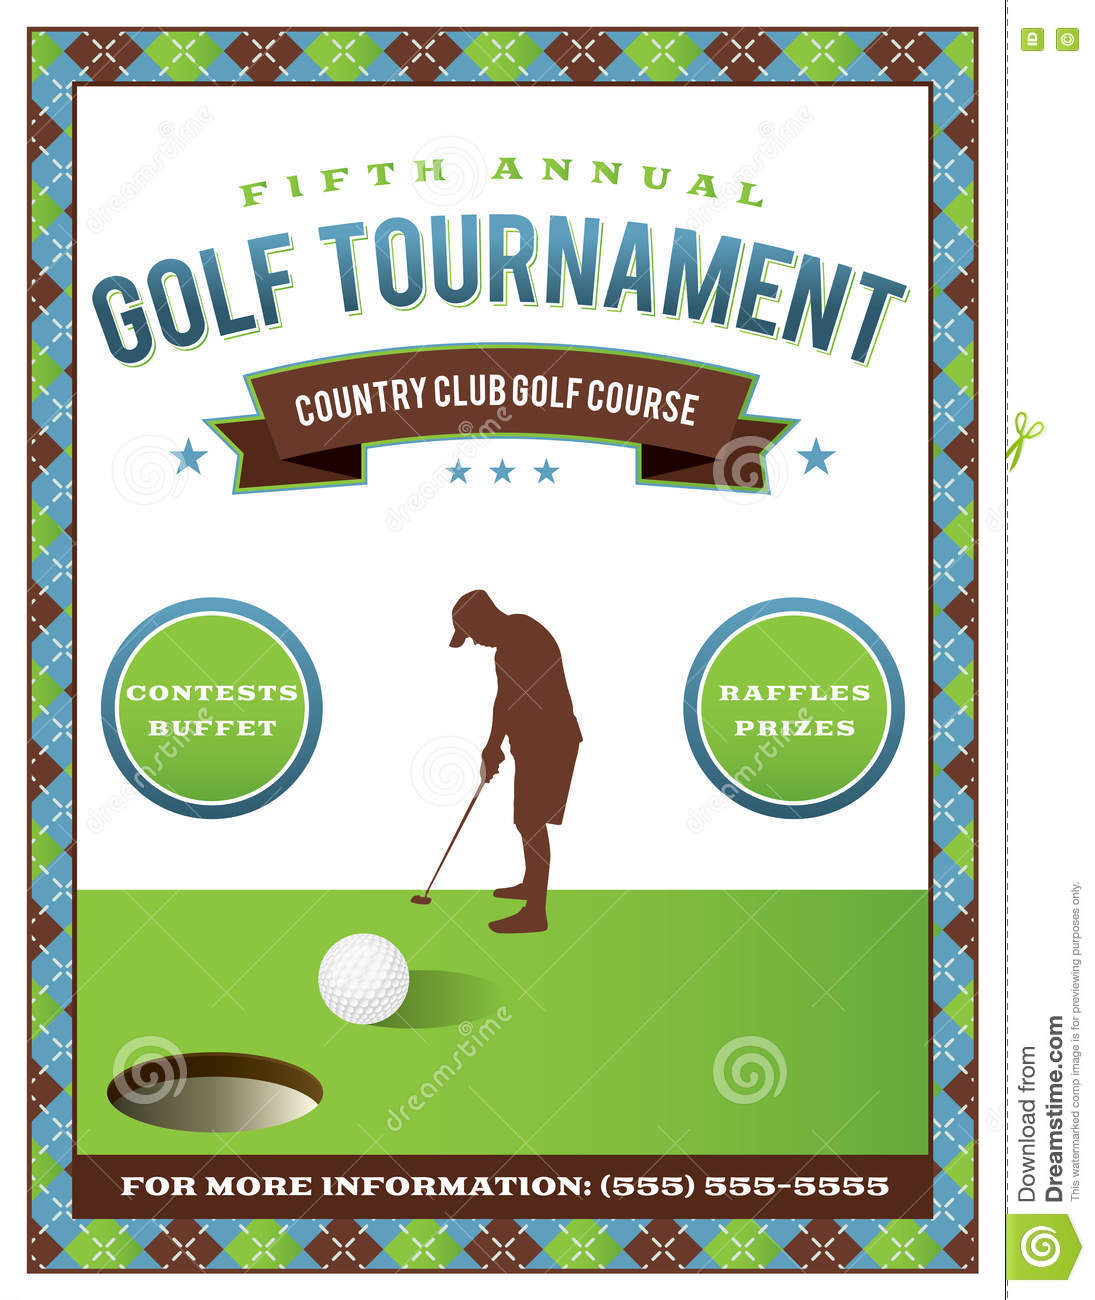 golf tournament brochure templates   Manqal.hellenes.co